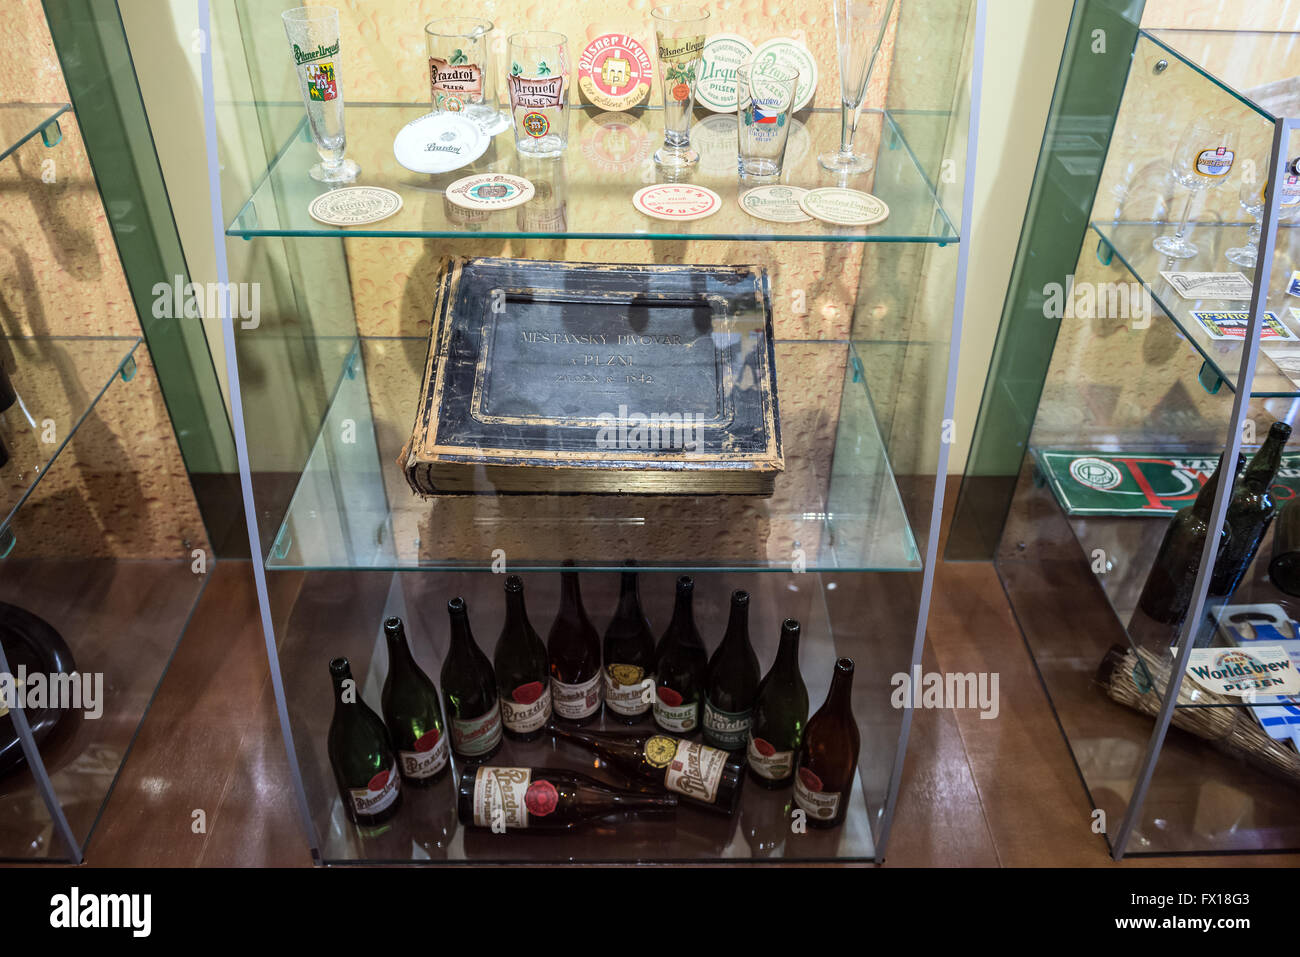 historic bottles and labels of Pilsner Urquell in Brewery Museum in Plzen (Pilsen) city, Czech Republic Stock Photo